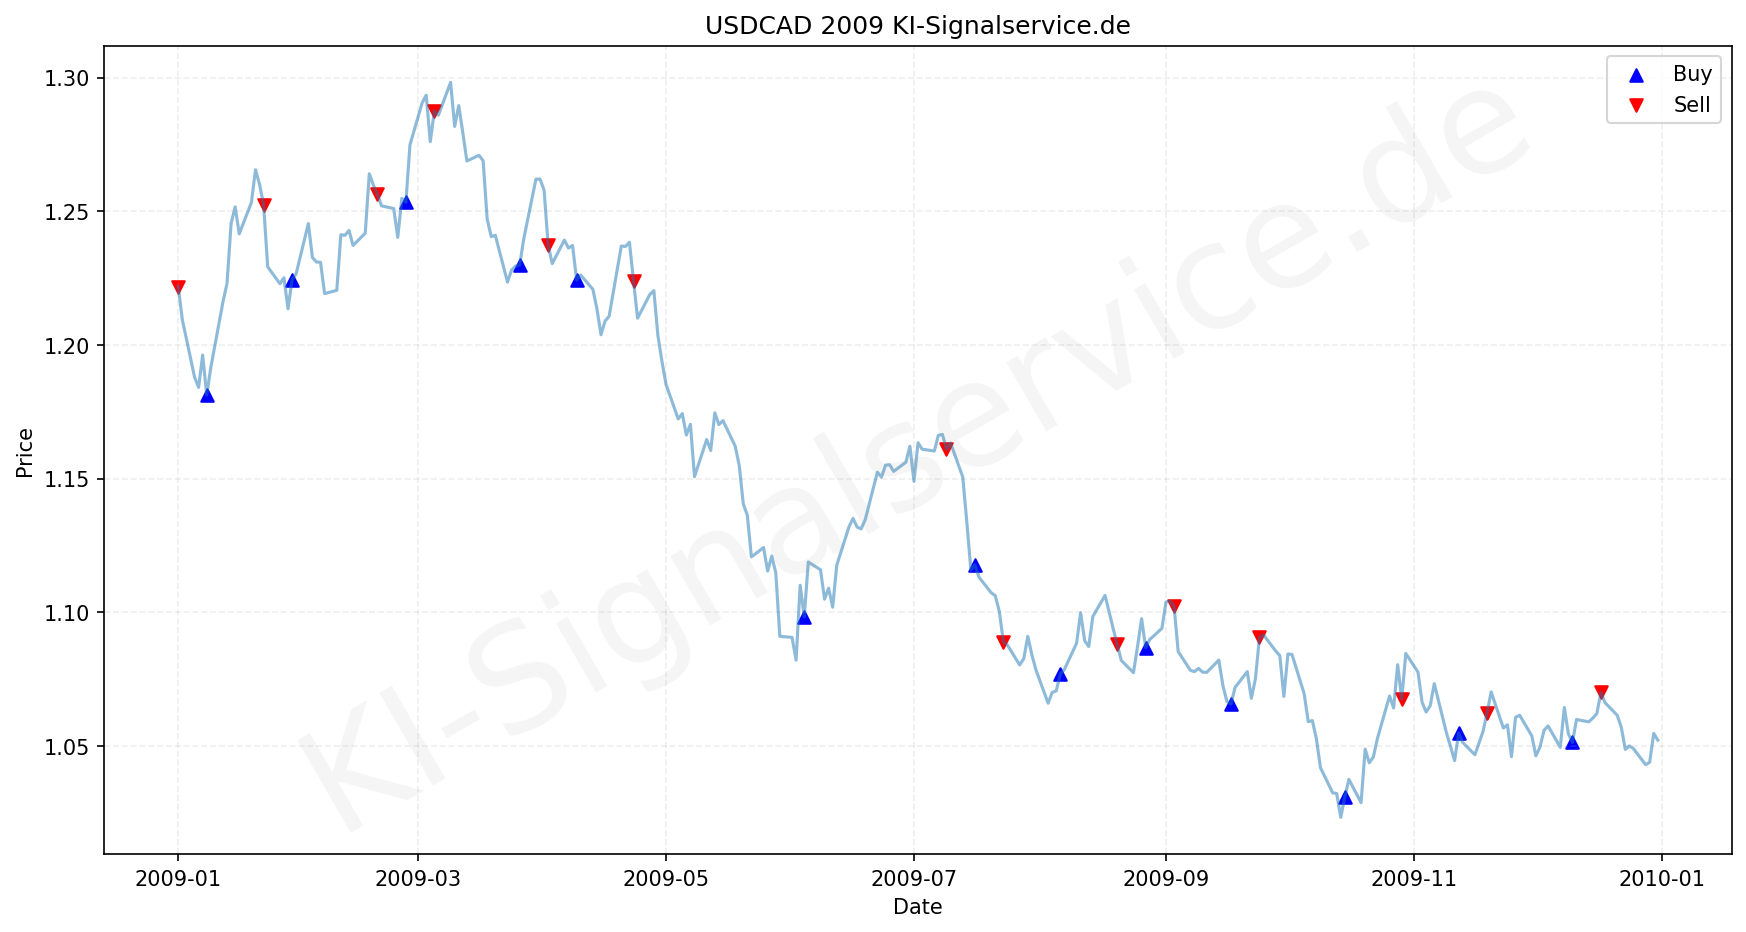 USDCAD Chart - KI Tradingsignale 2009